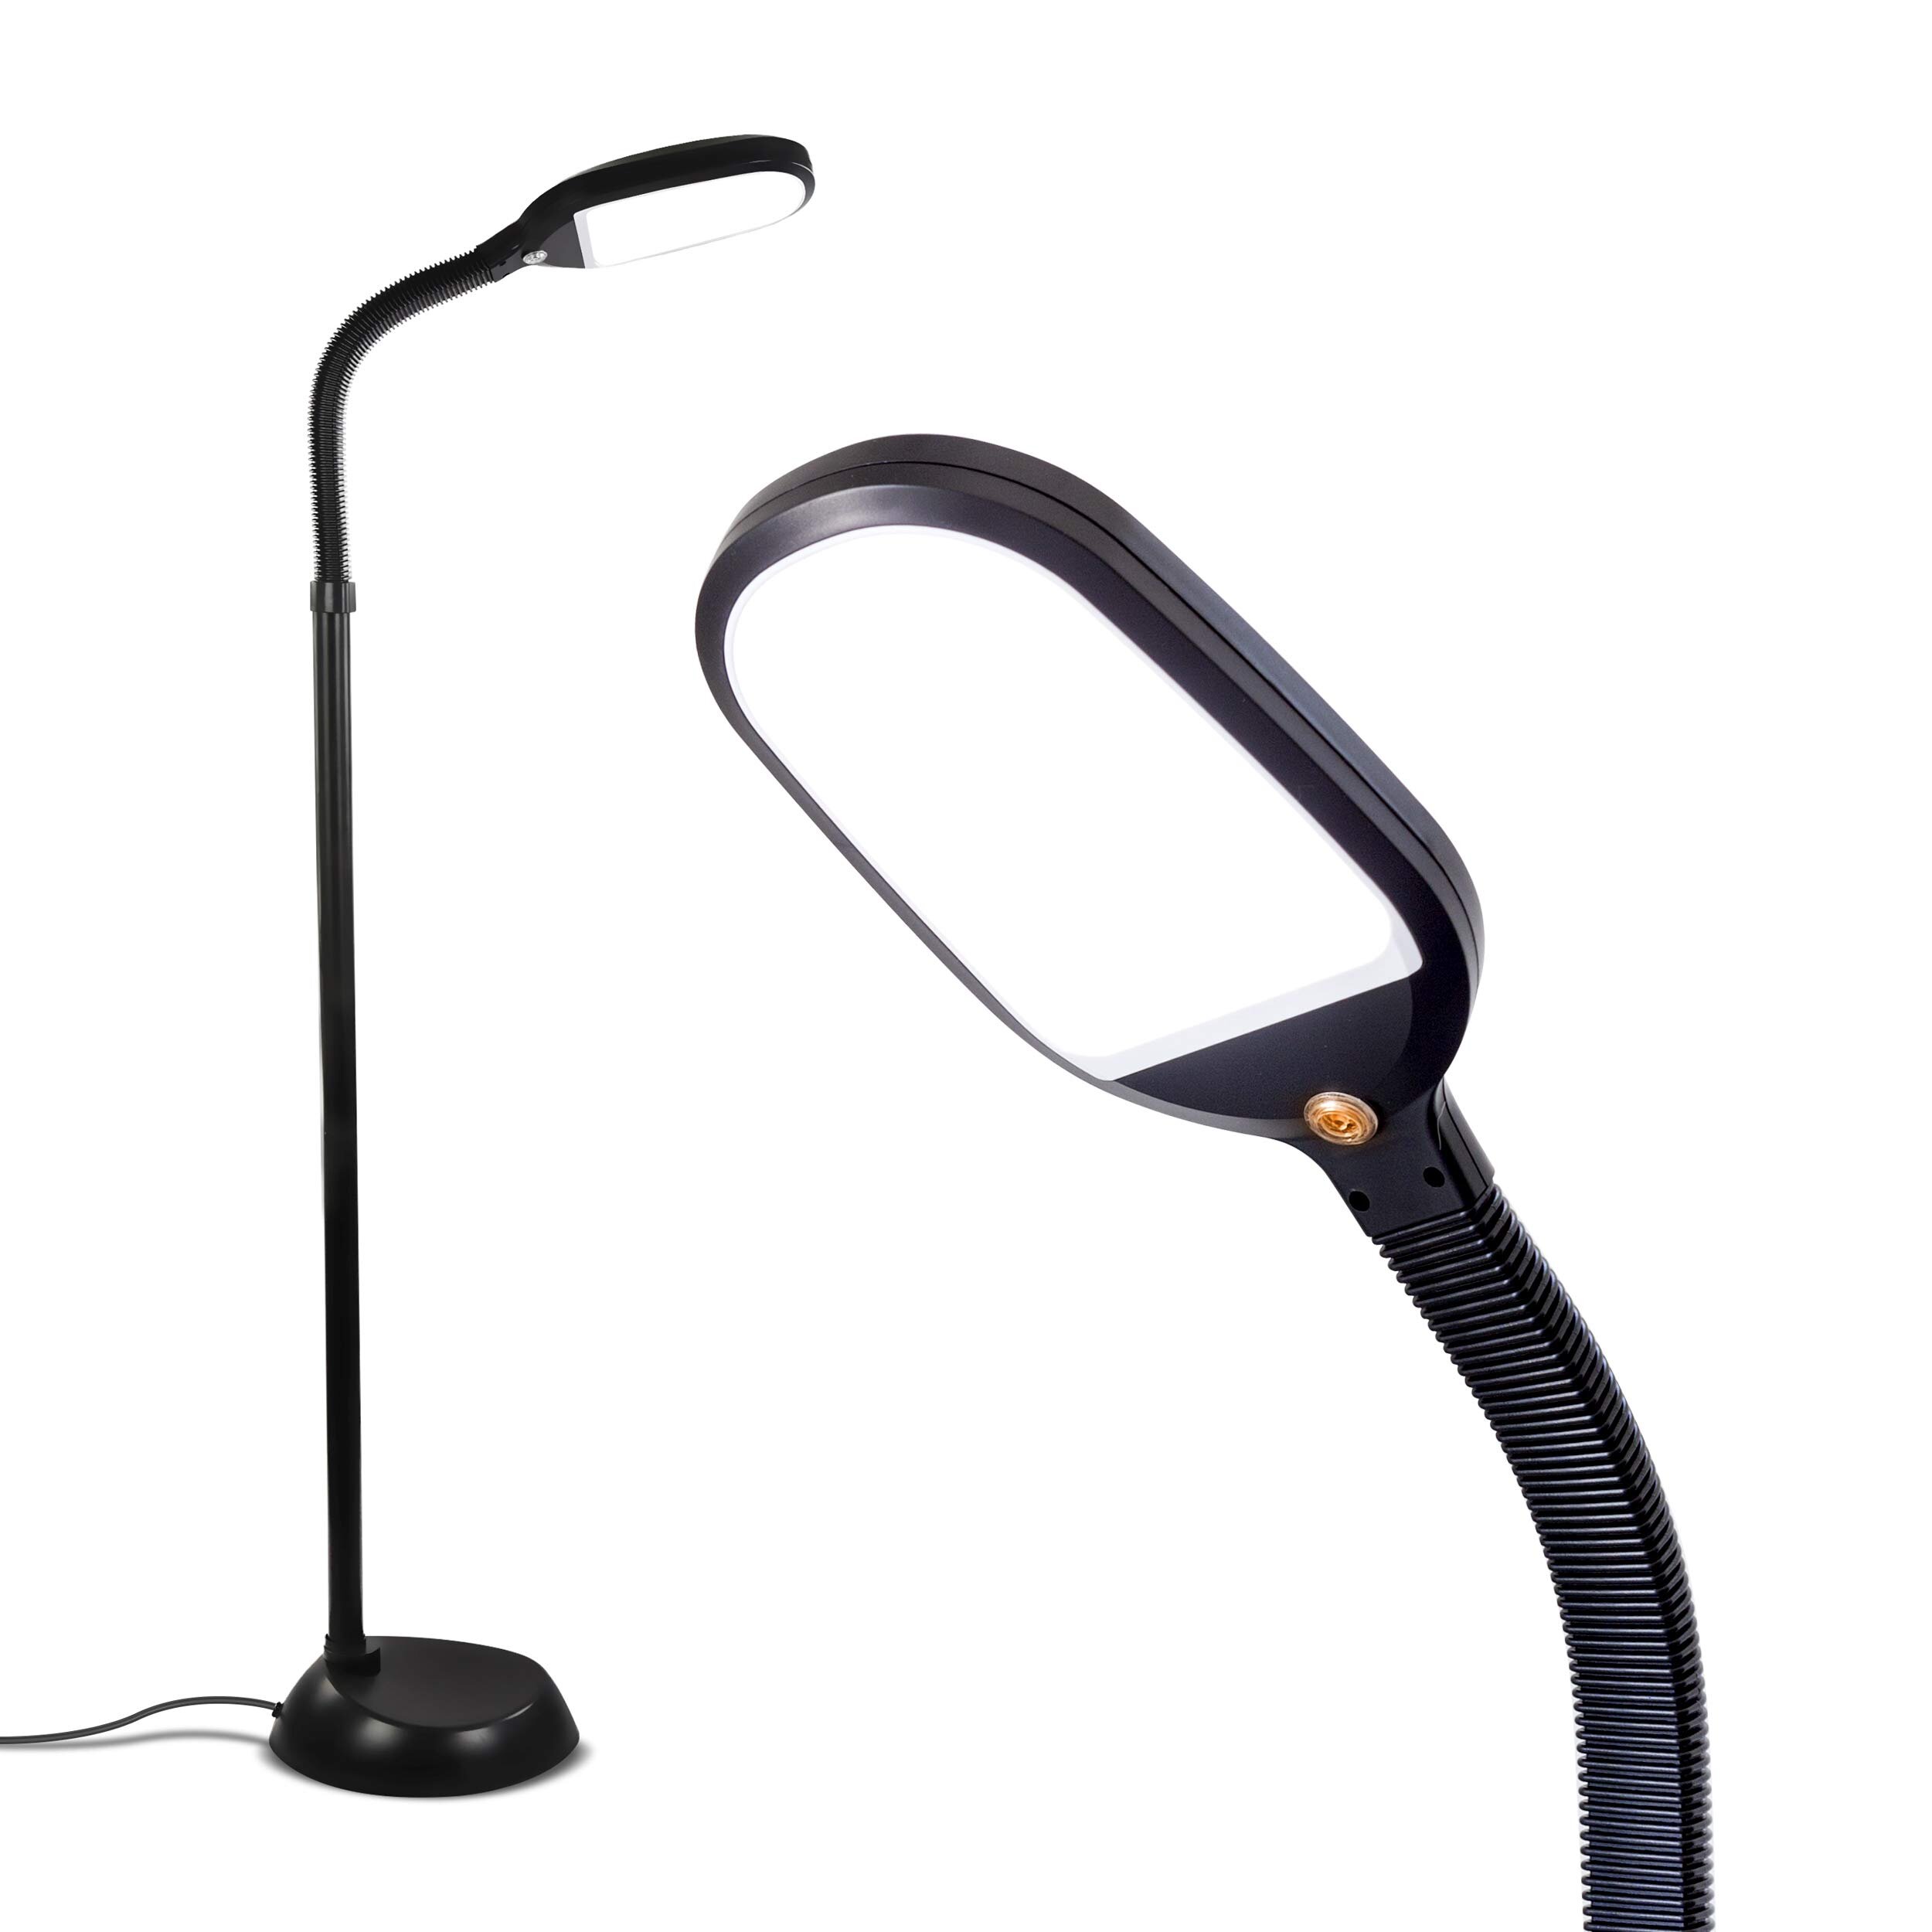 Orren Ellis Bright Led Floor Lamp For Crafts And Reading - Estheticians'  Light For Lash Extensions - Natural Daylight Lighting For Office Tasks -  Adjustable Gooseneck Pole Lamp (Jet Black) | Wayfair